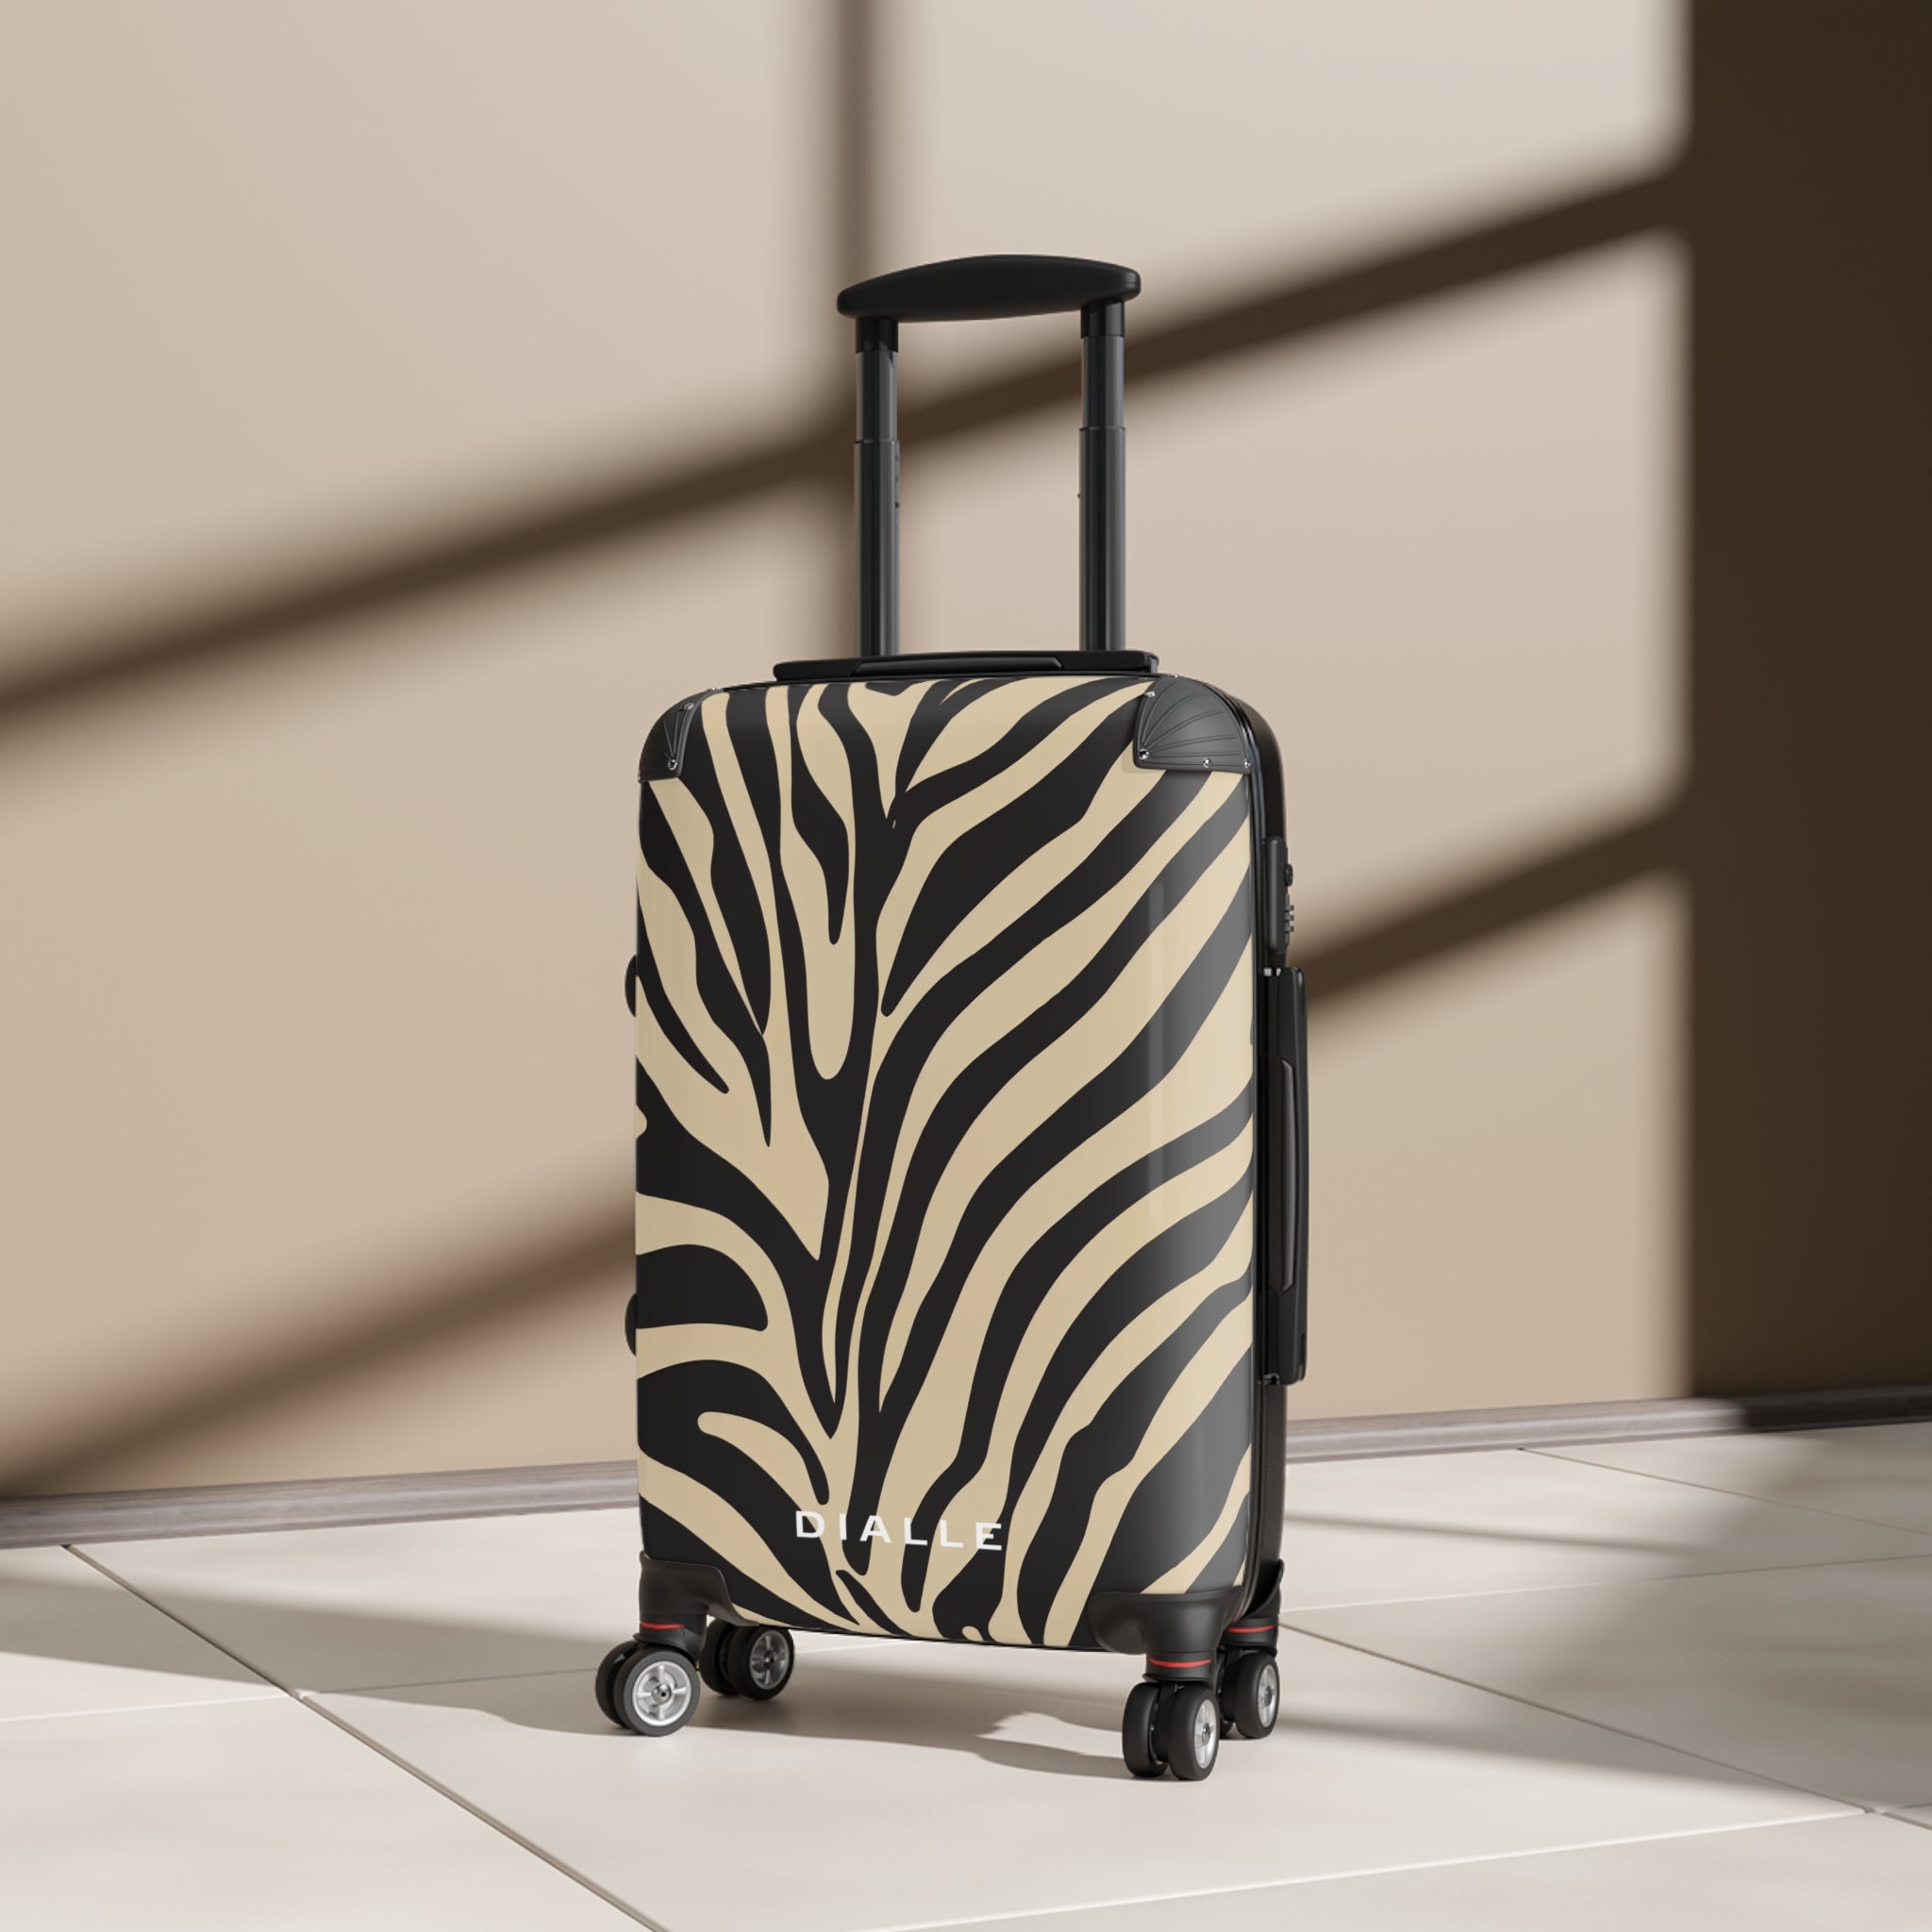 Zebra Chic Suitcase